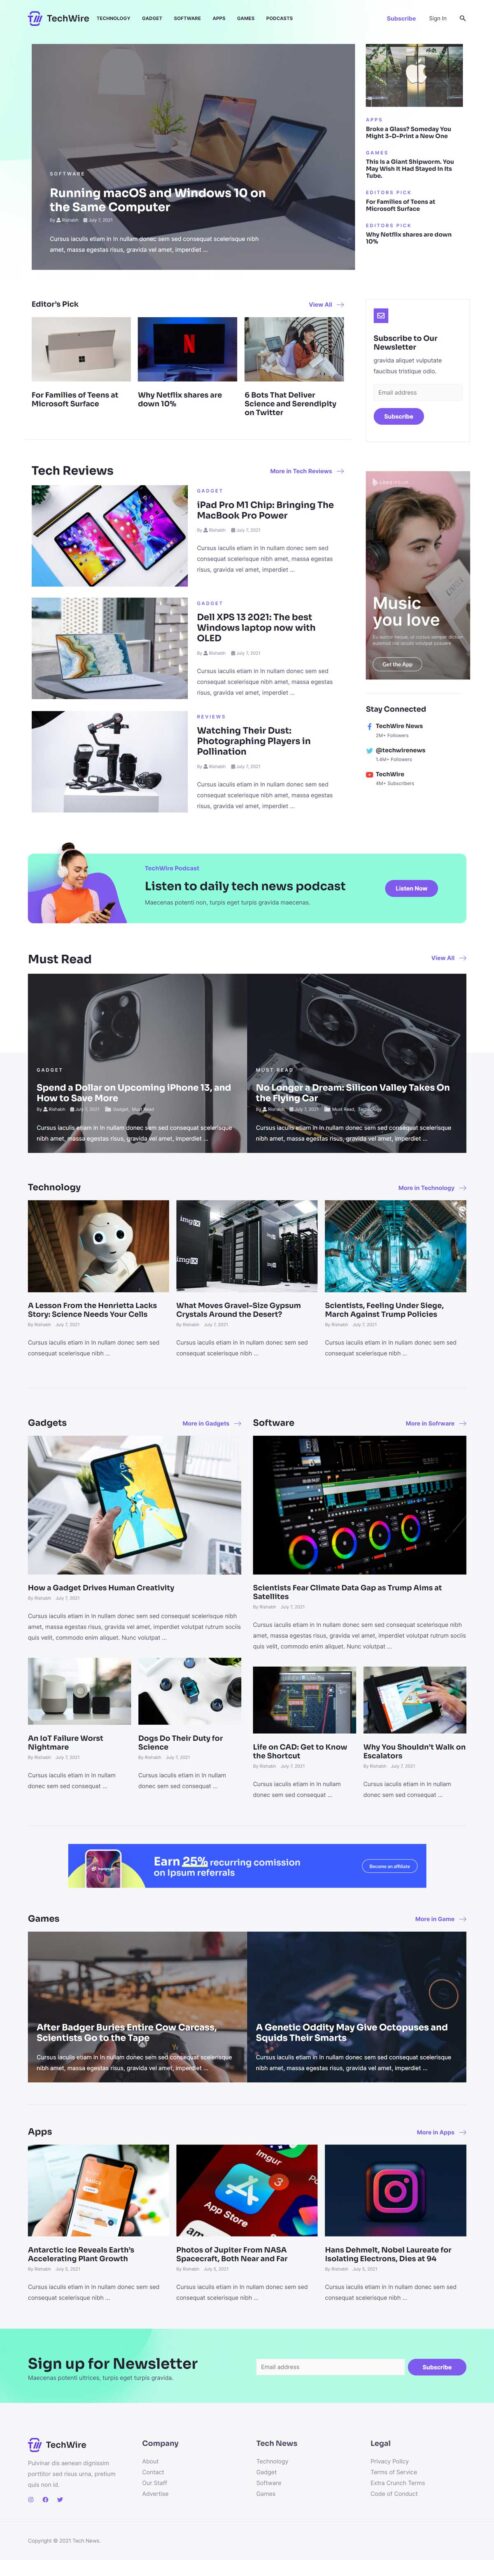 Tech News home page